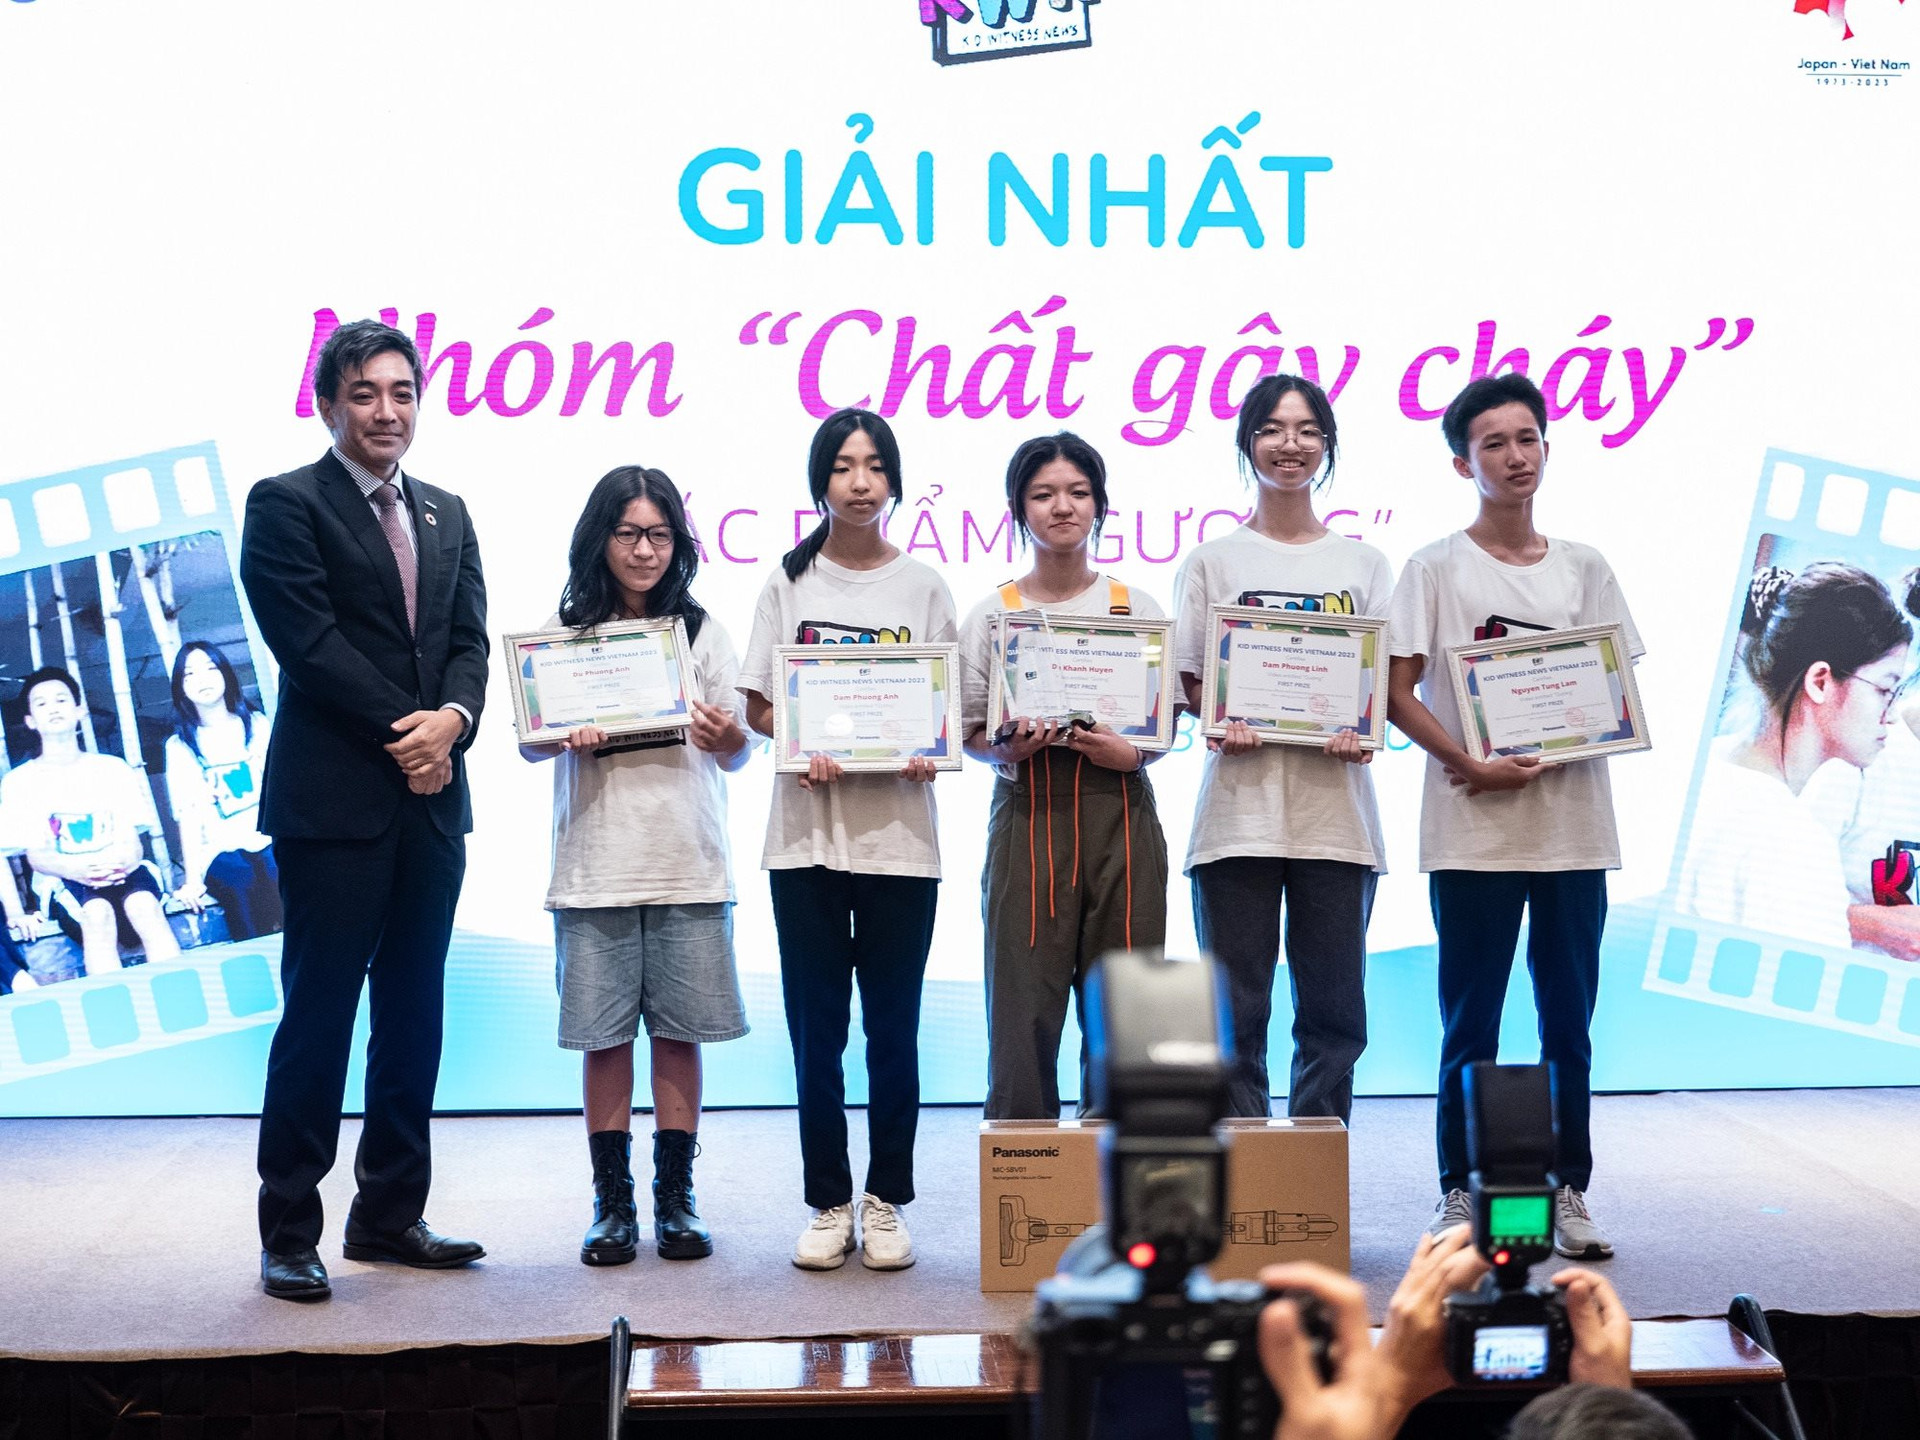 nhom-chat-gay-chay-voi-bo-phim-guong-dat-giai-nhat-cho-nhom-lua-tuoi-13-18-1693270138403413425513.jpg